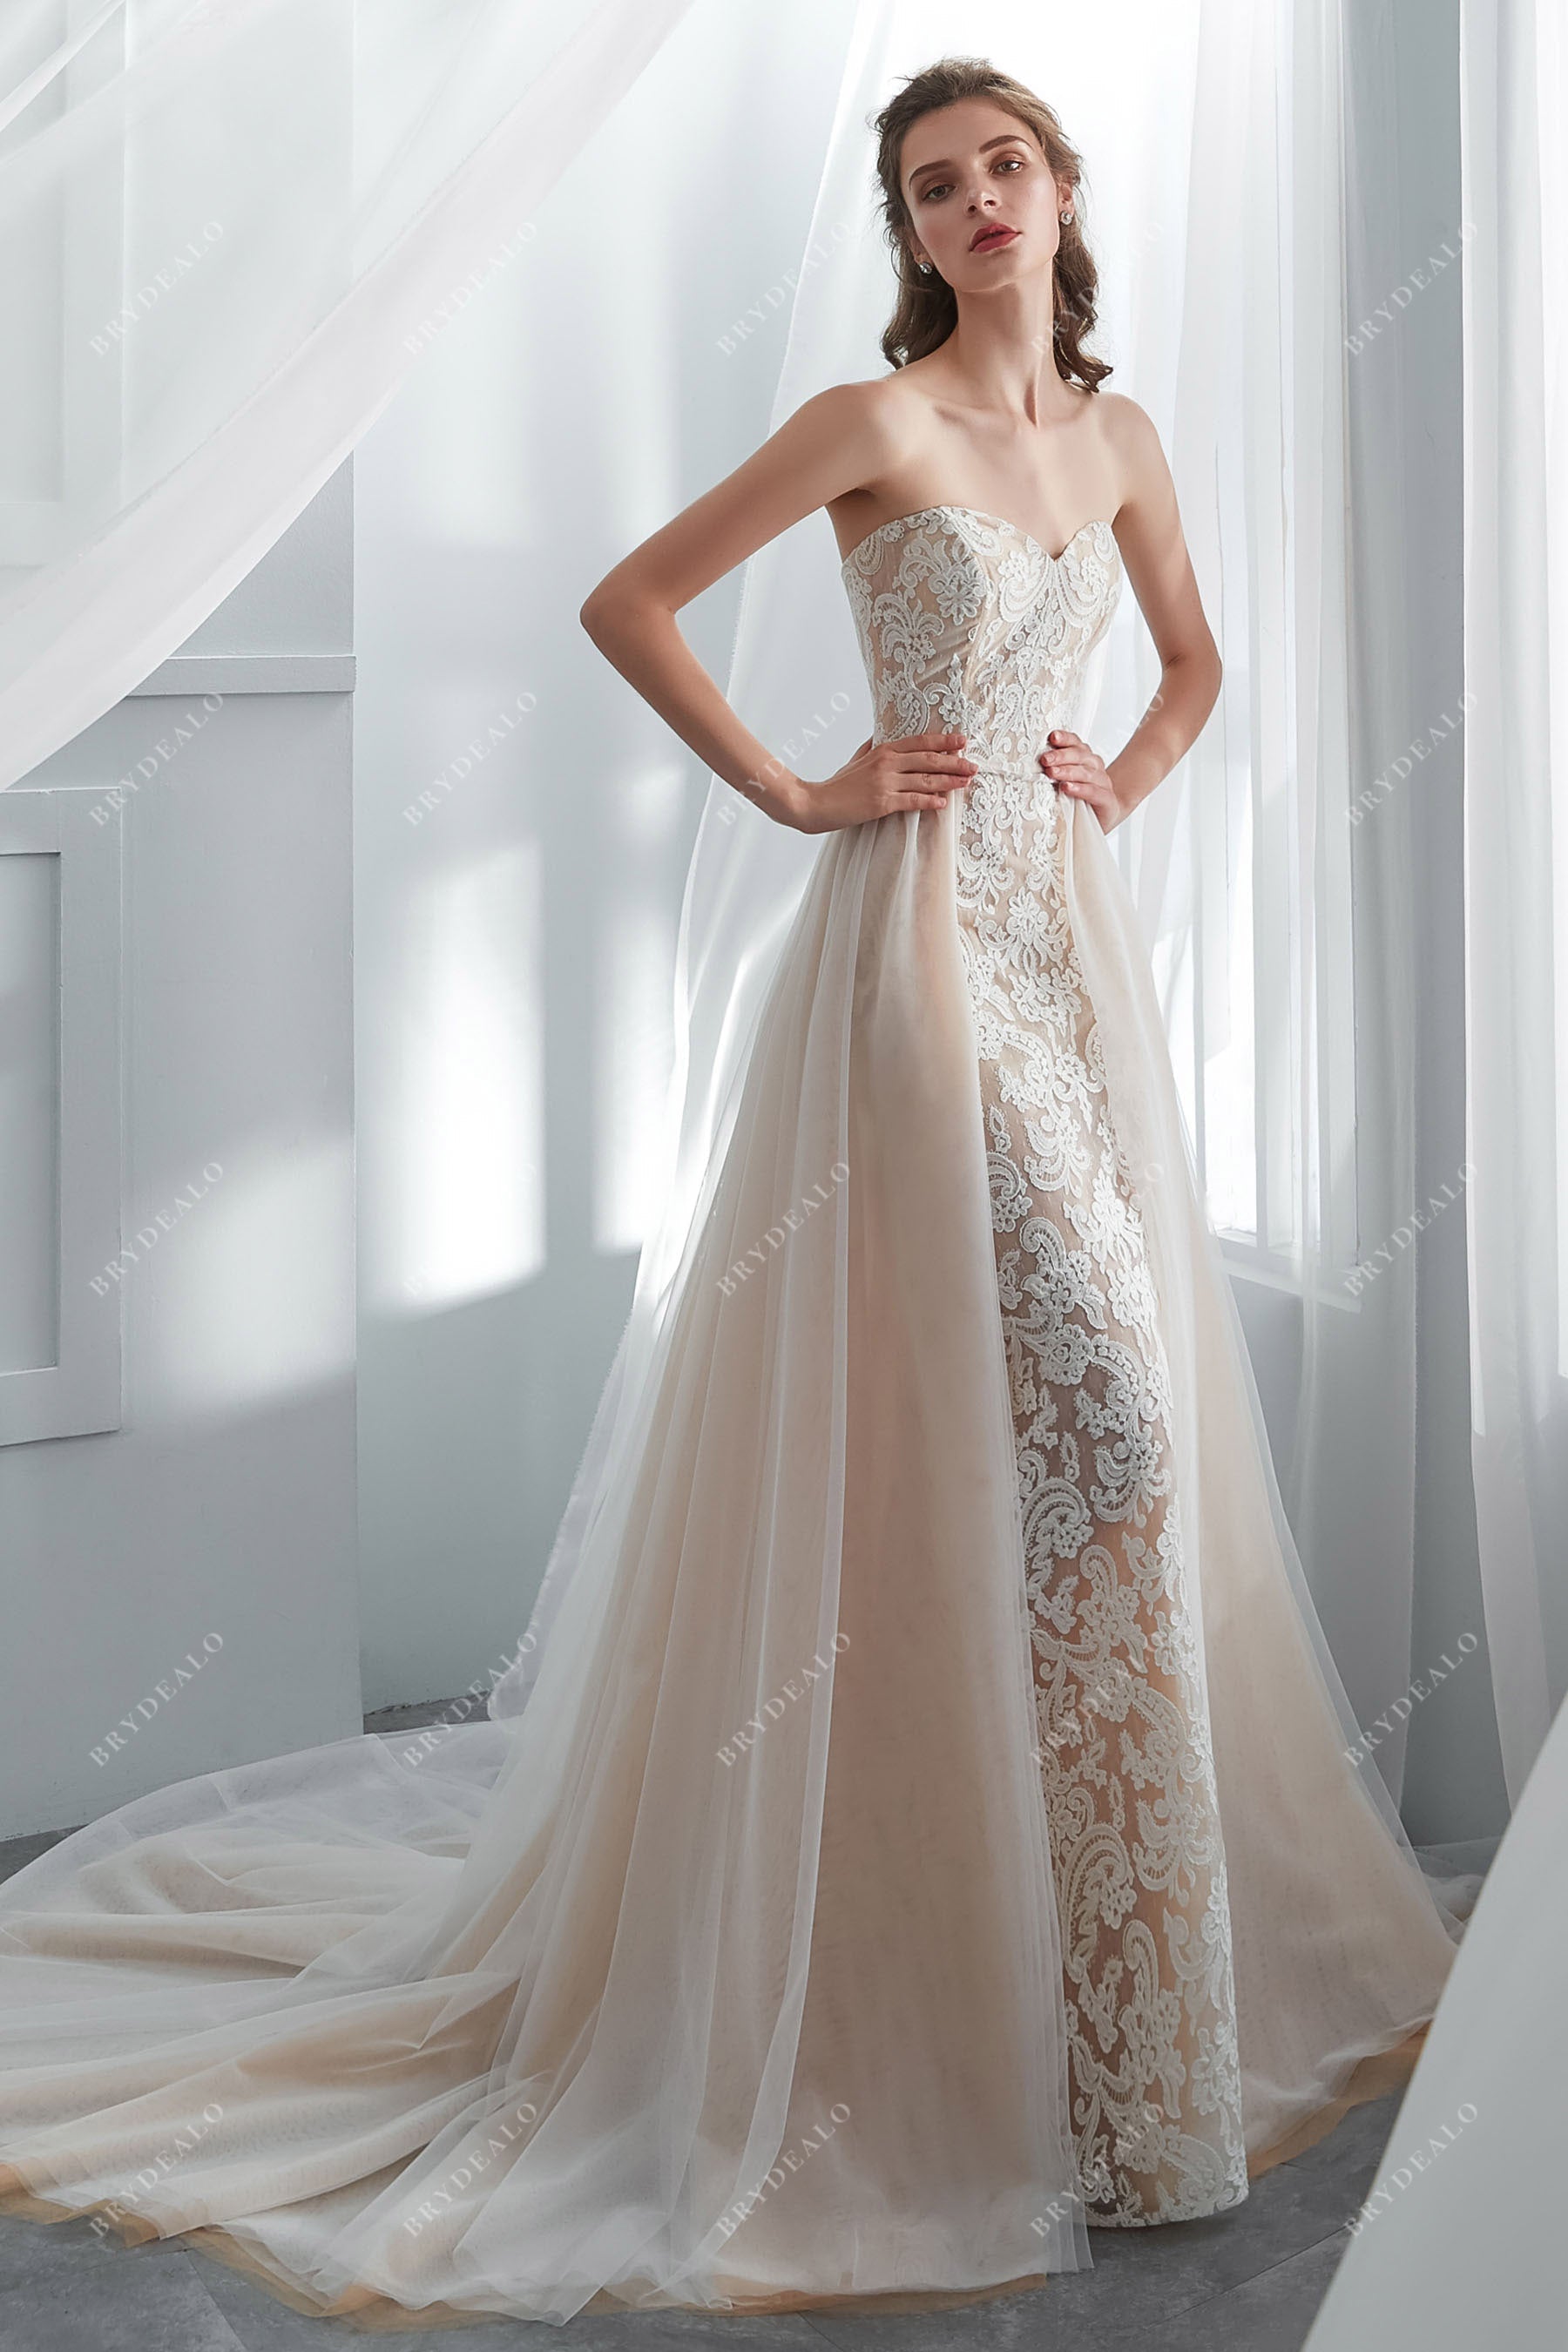 Chapel Train Detachable Overskirt Wedding Gown Online